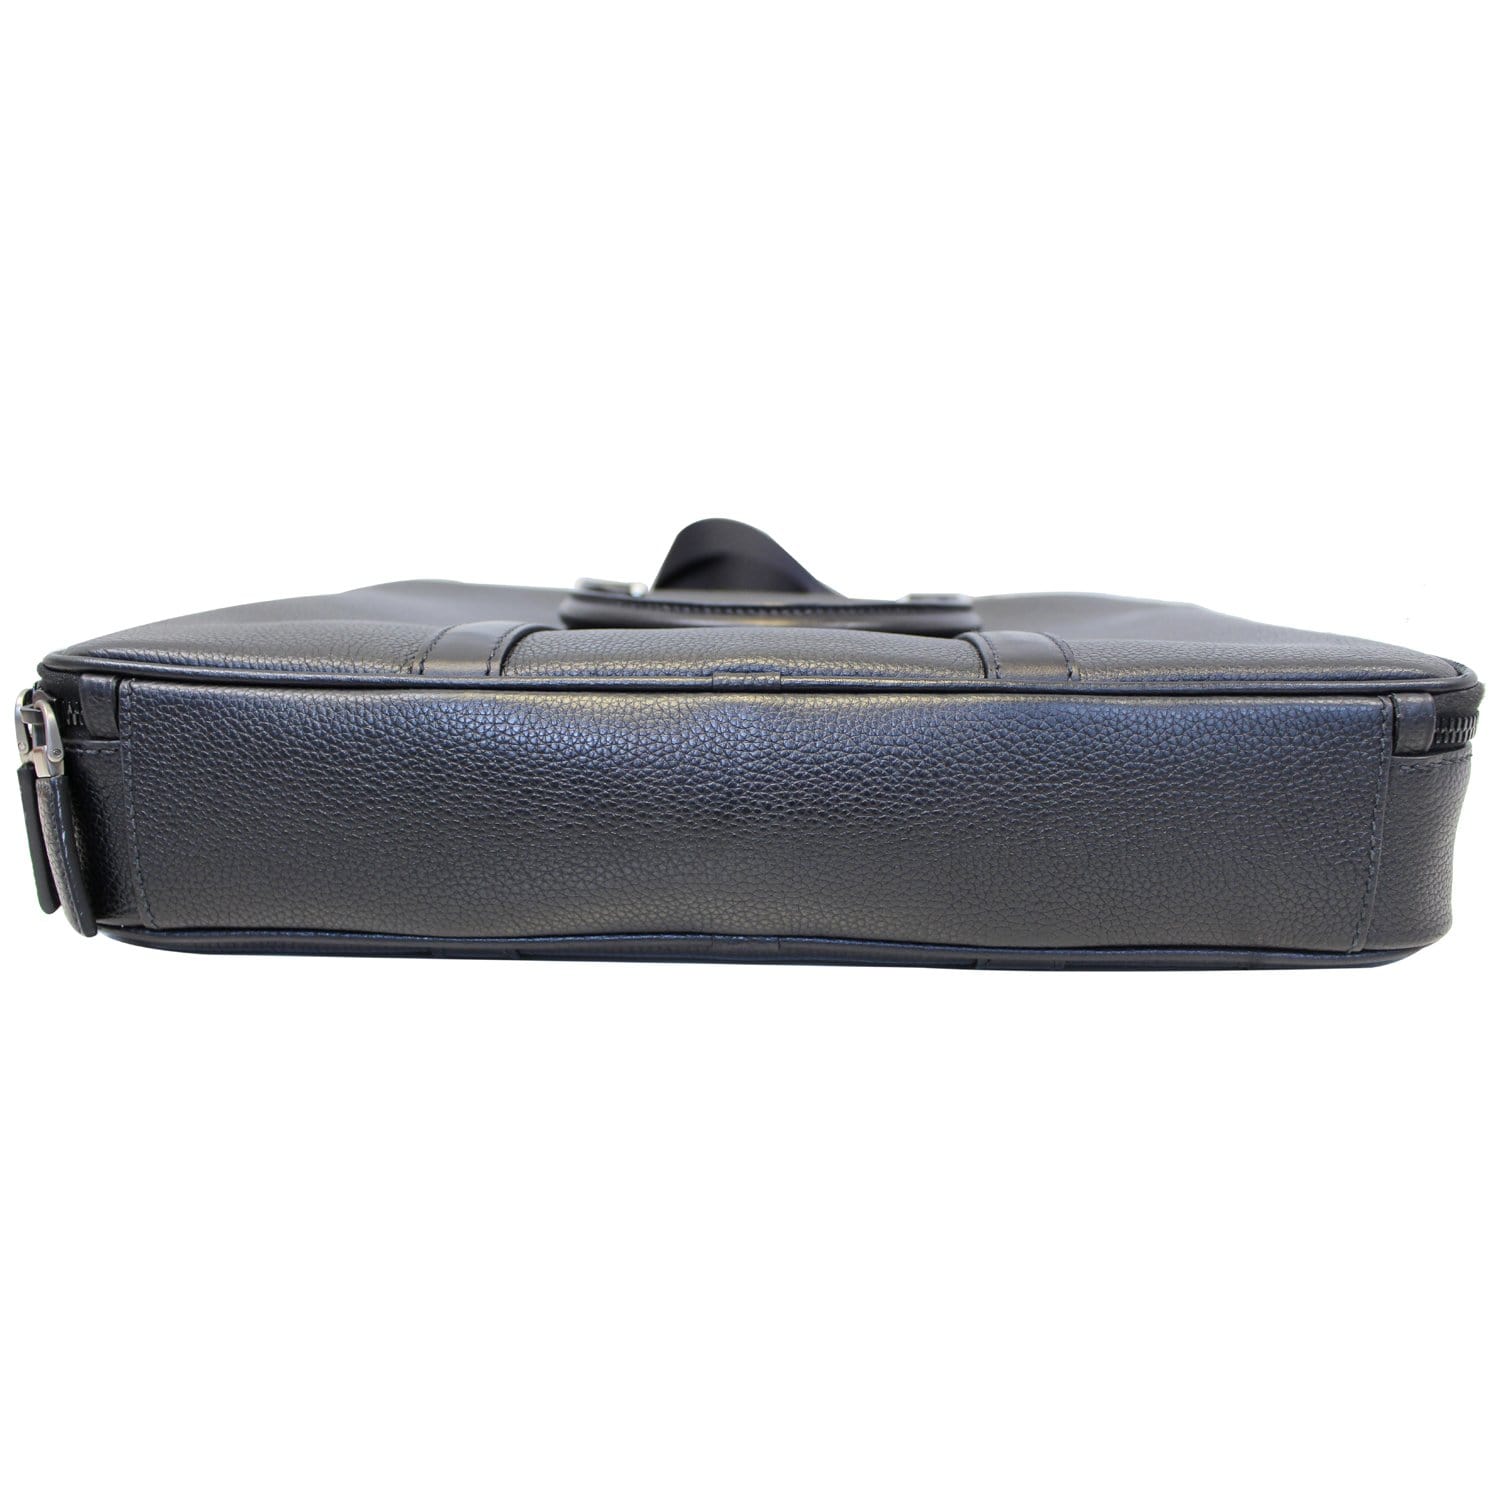 Pre-owned Prada Elegant Briefcase #39173 Leather Laptop Bag